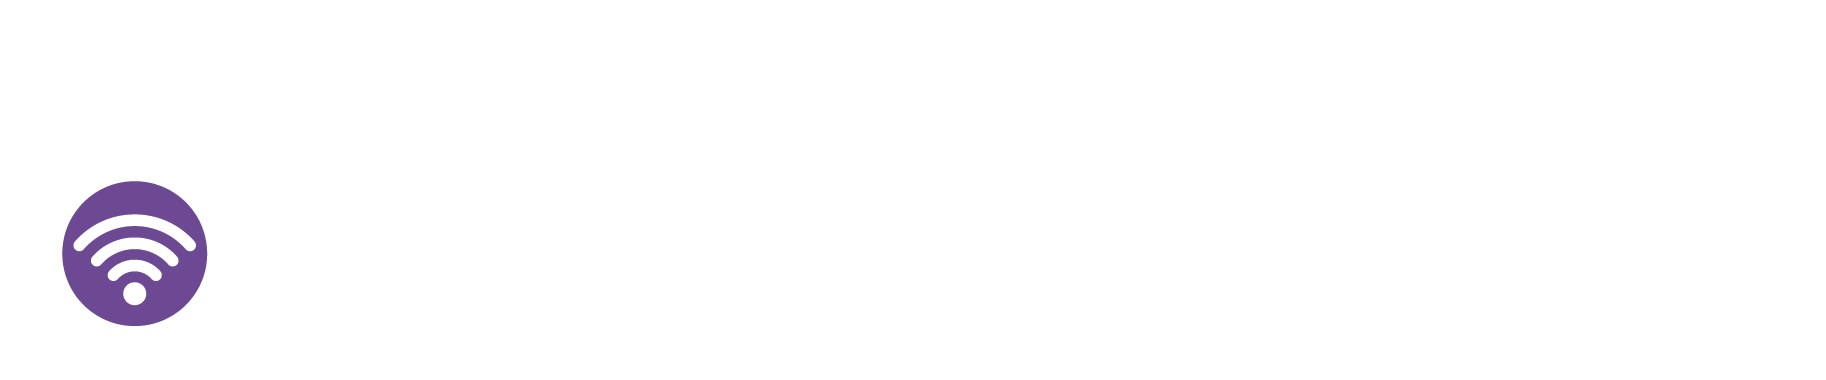 Logo-CDC-Blanc-Violet-2.png